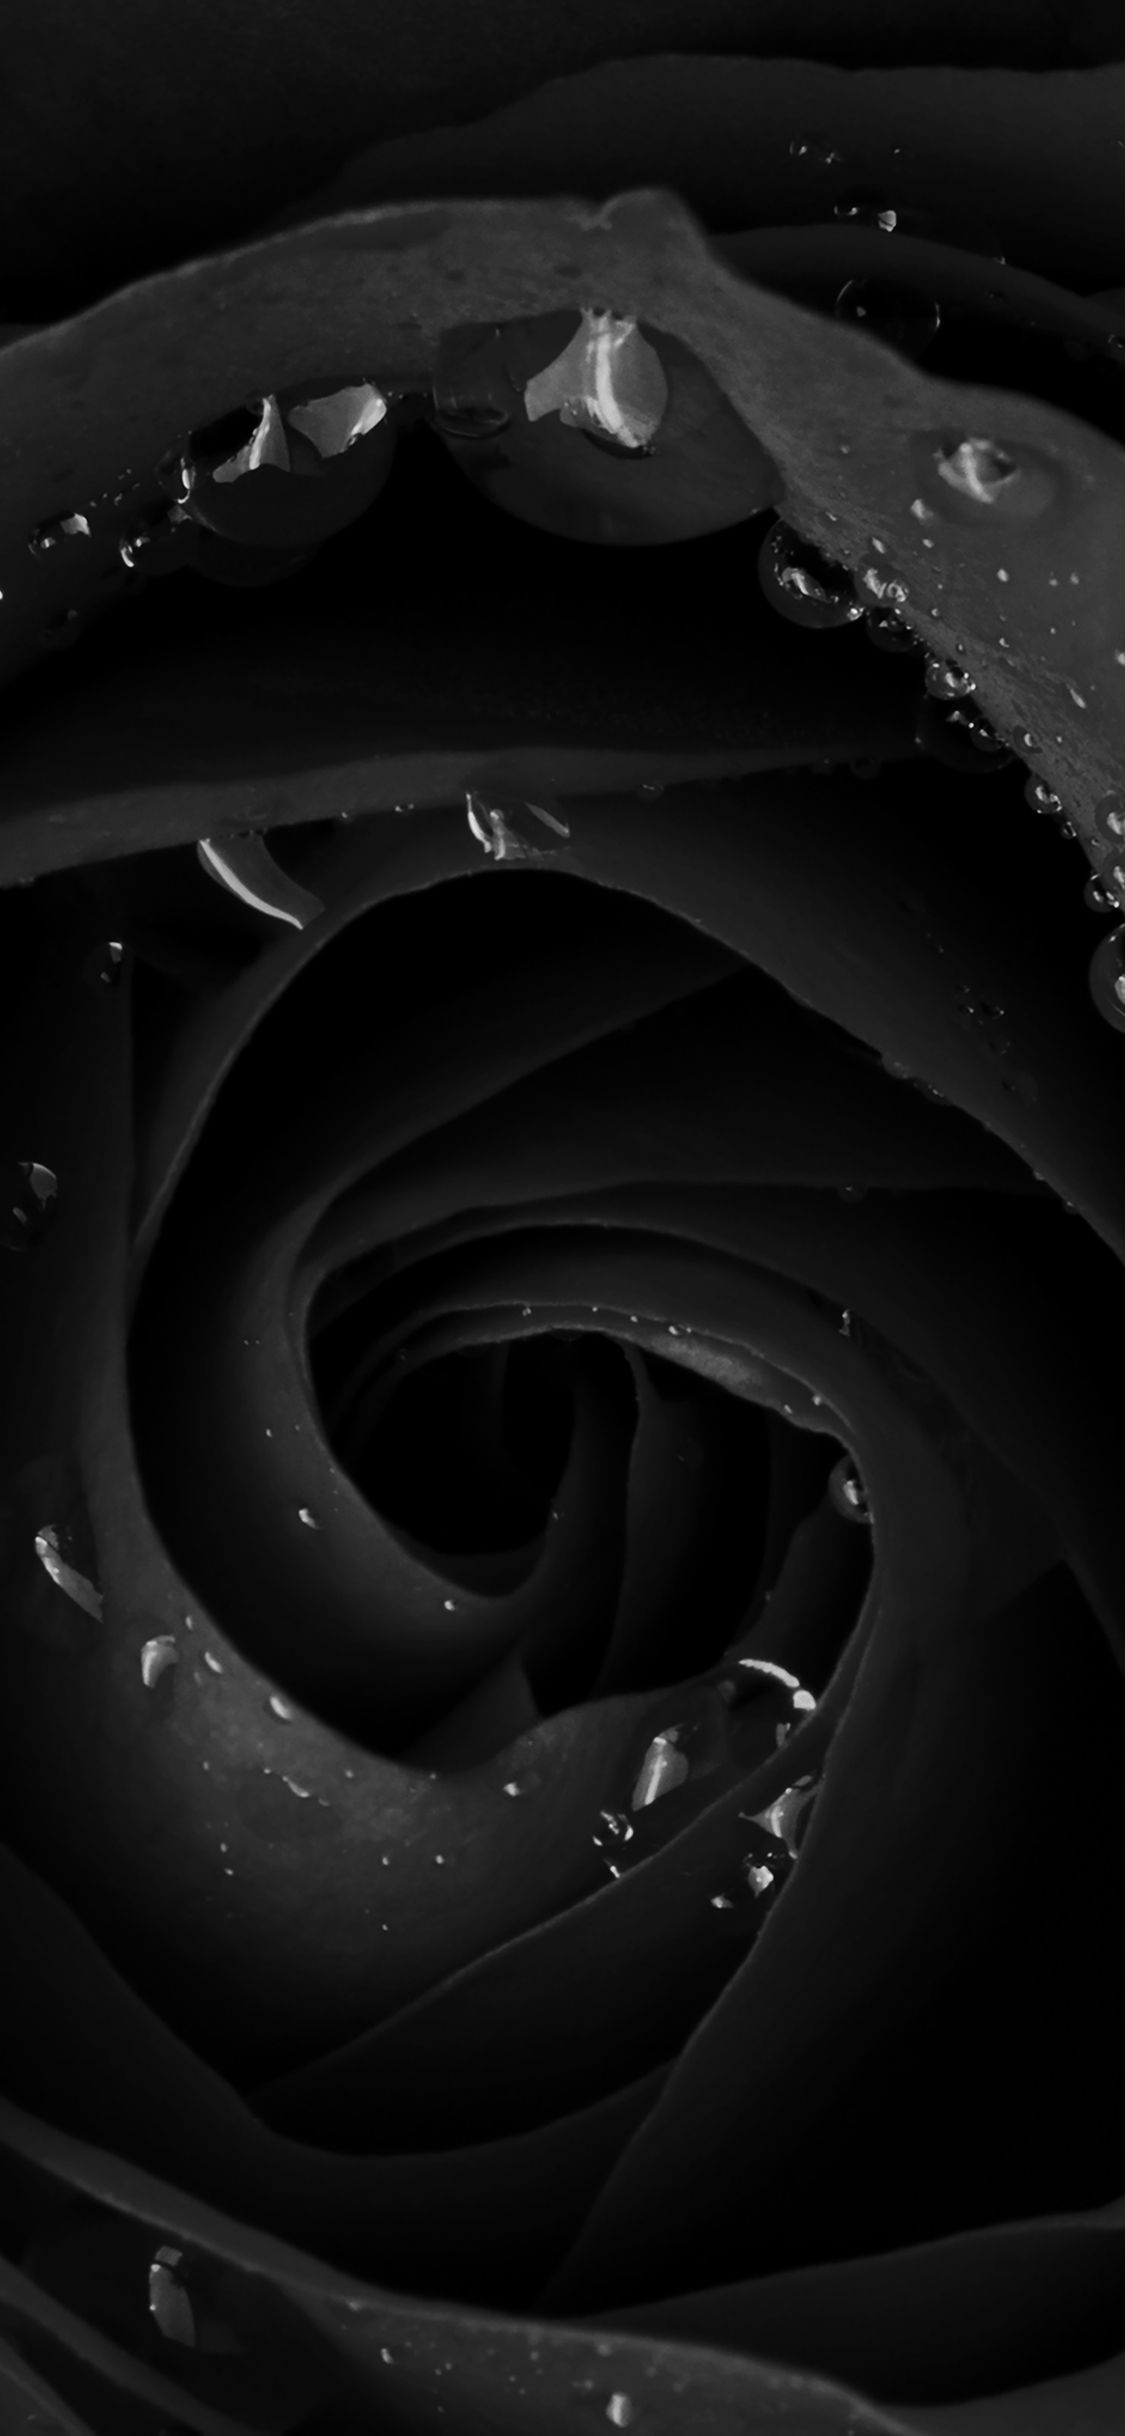 iPhone X wallpaper. beautiful dark rose flower nature